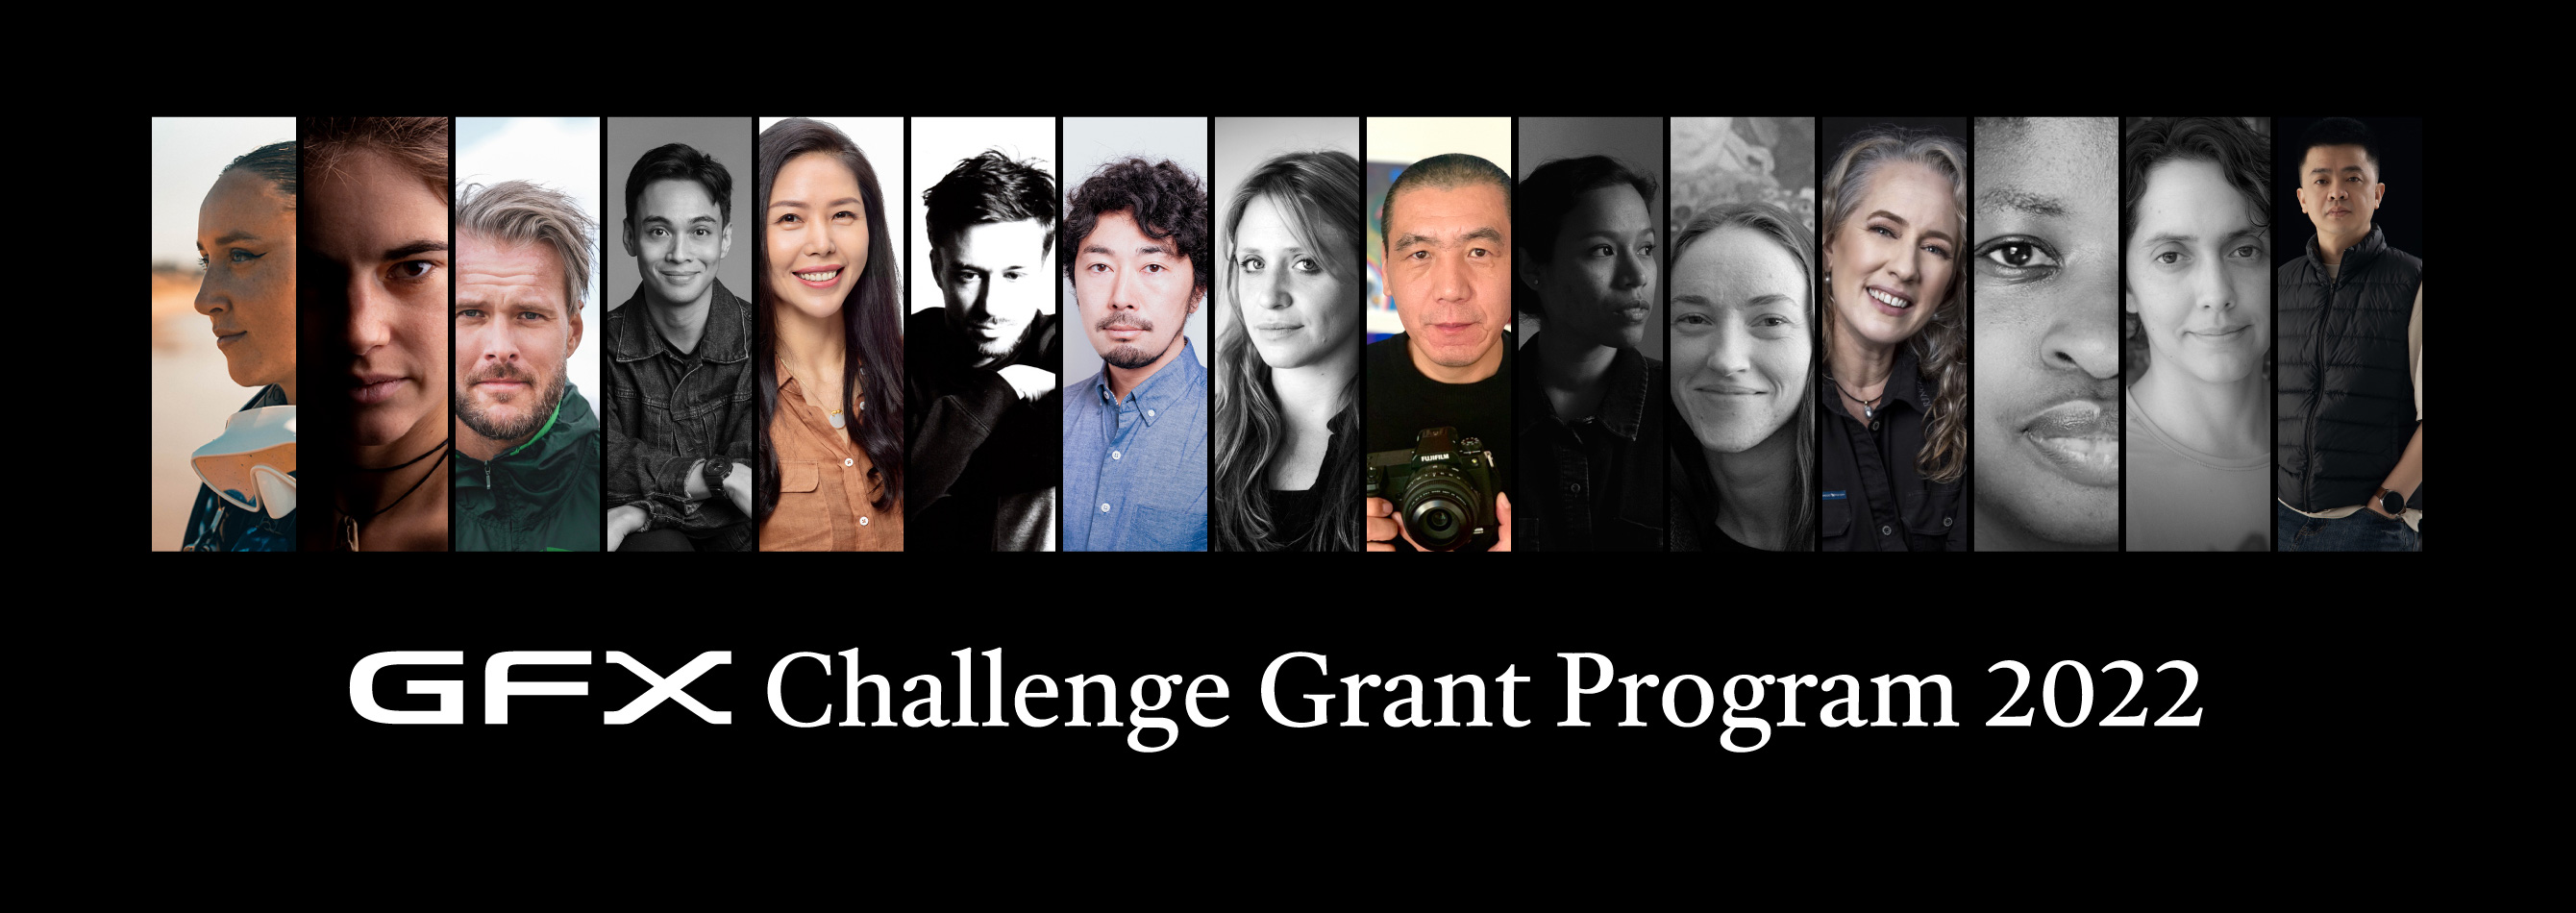 GFX Challenge Grant Program 2022